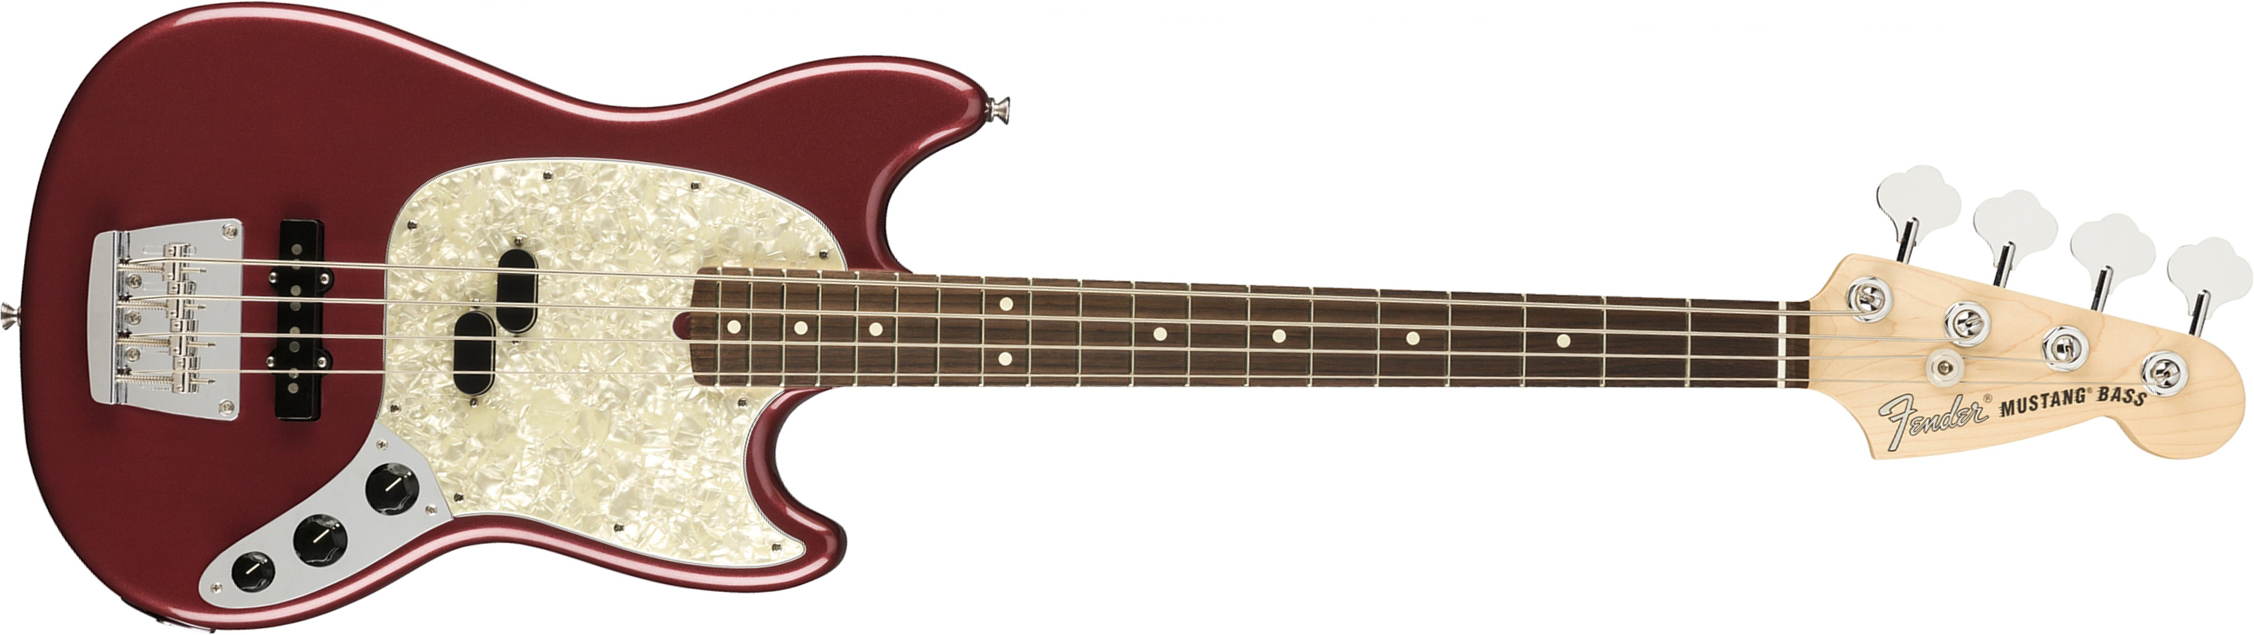 Fender Mustang Bass American Performer Usa Rw - Aubergine - Short scale elektrische bas - Main picture